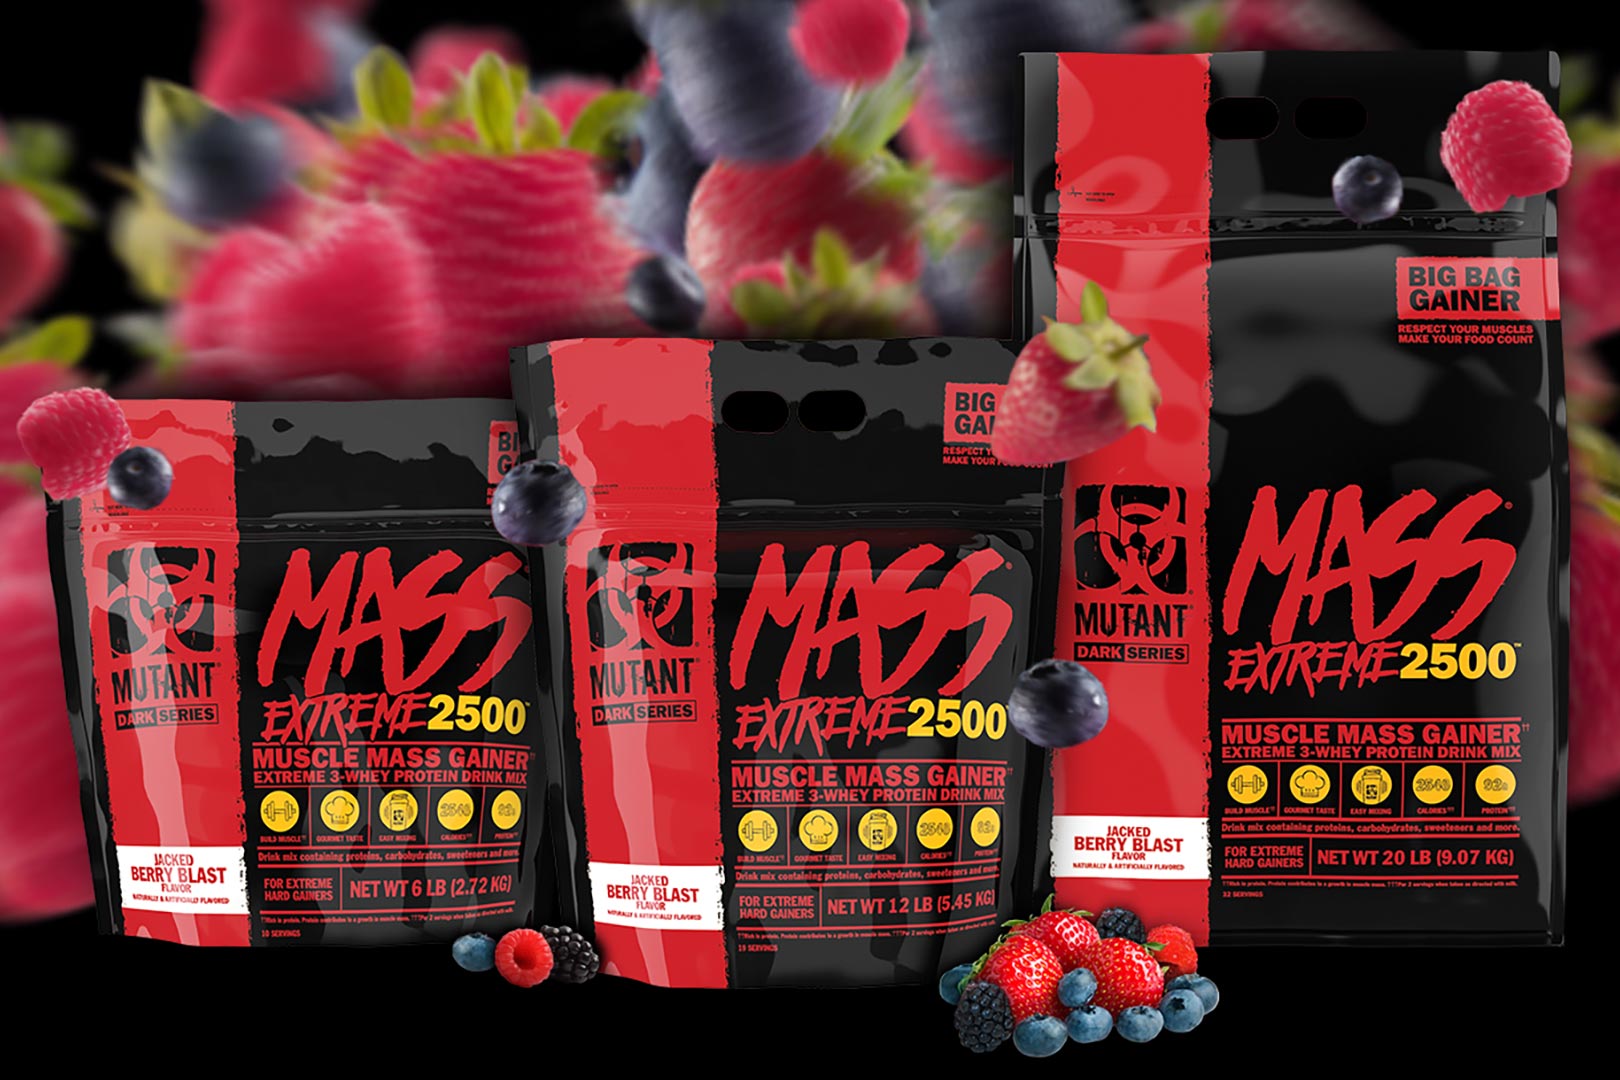 Jacked Berry Blast Mutant Mass Extreme 2500